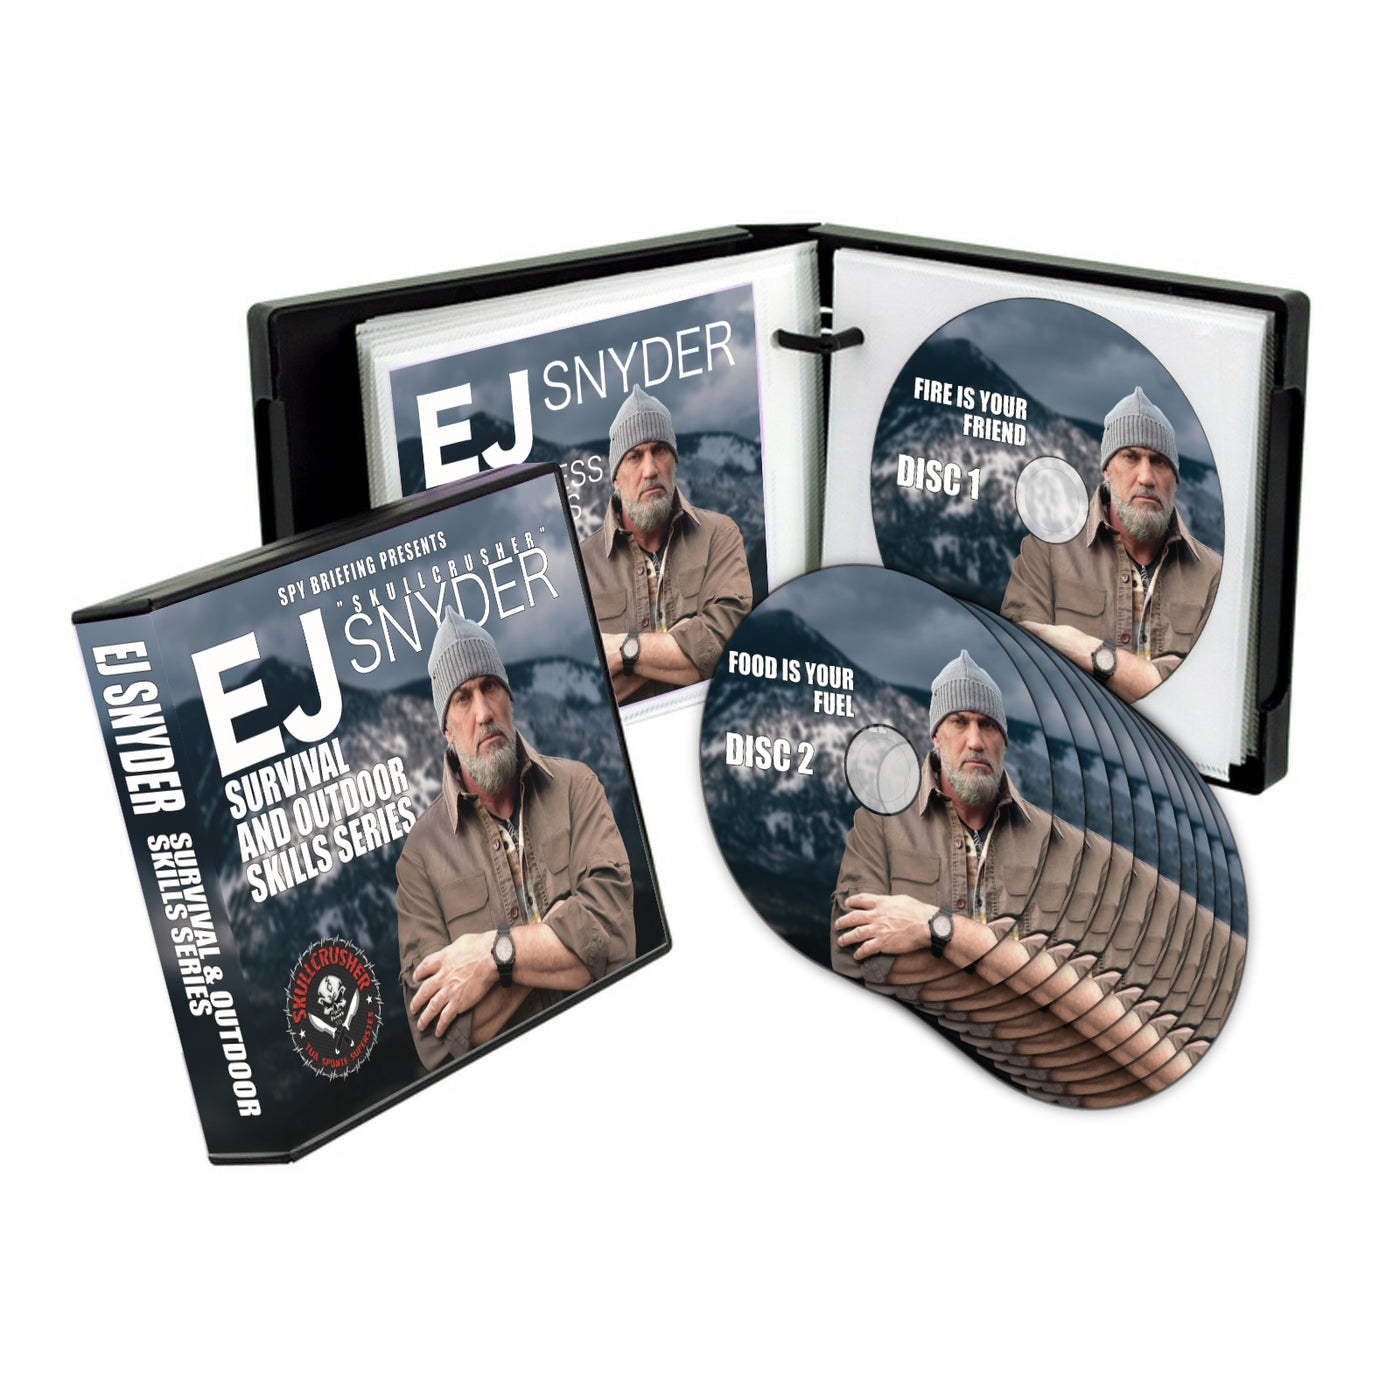 EJ Snyder Survival & Outdoor Skills Series DVD